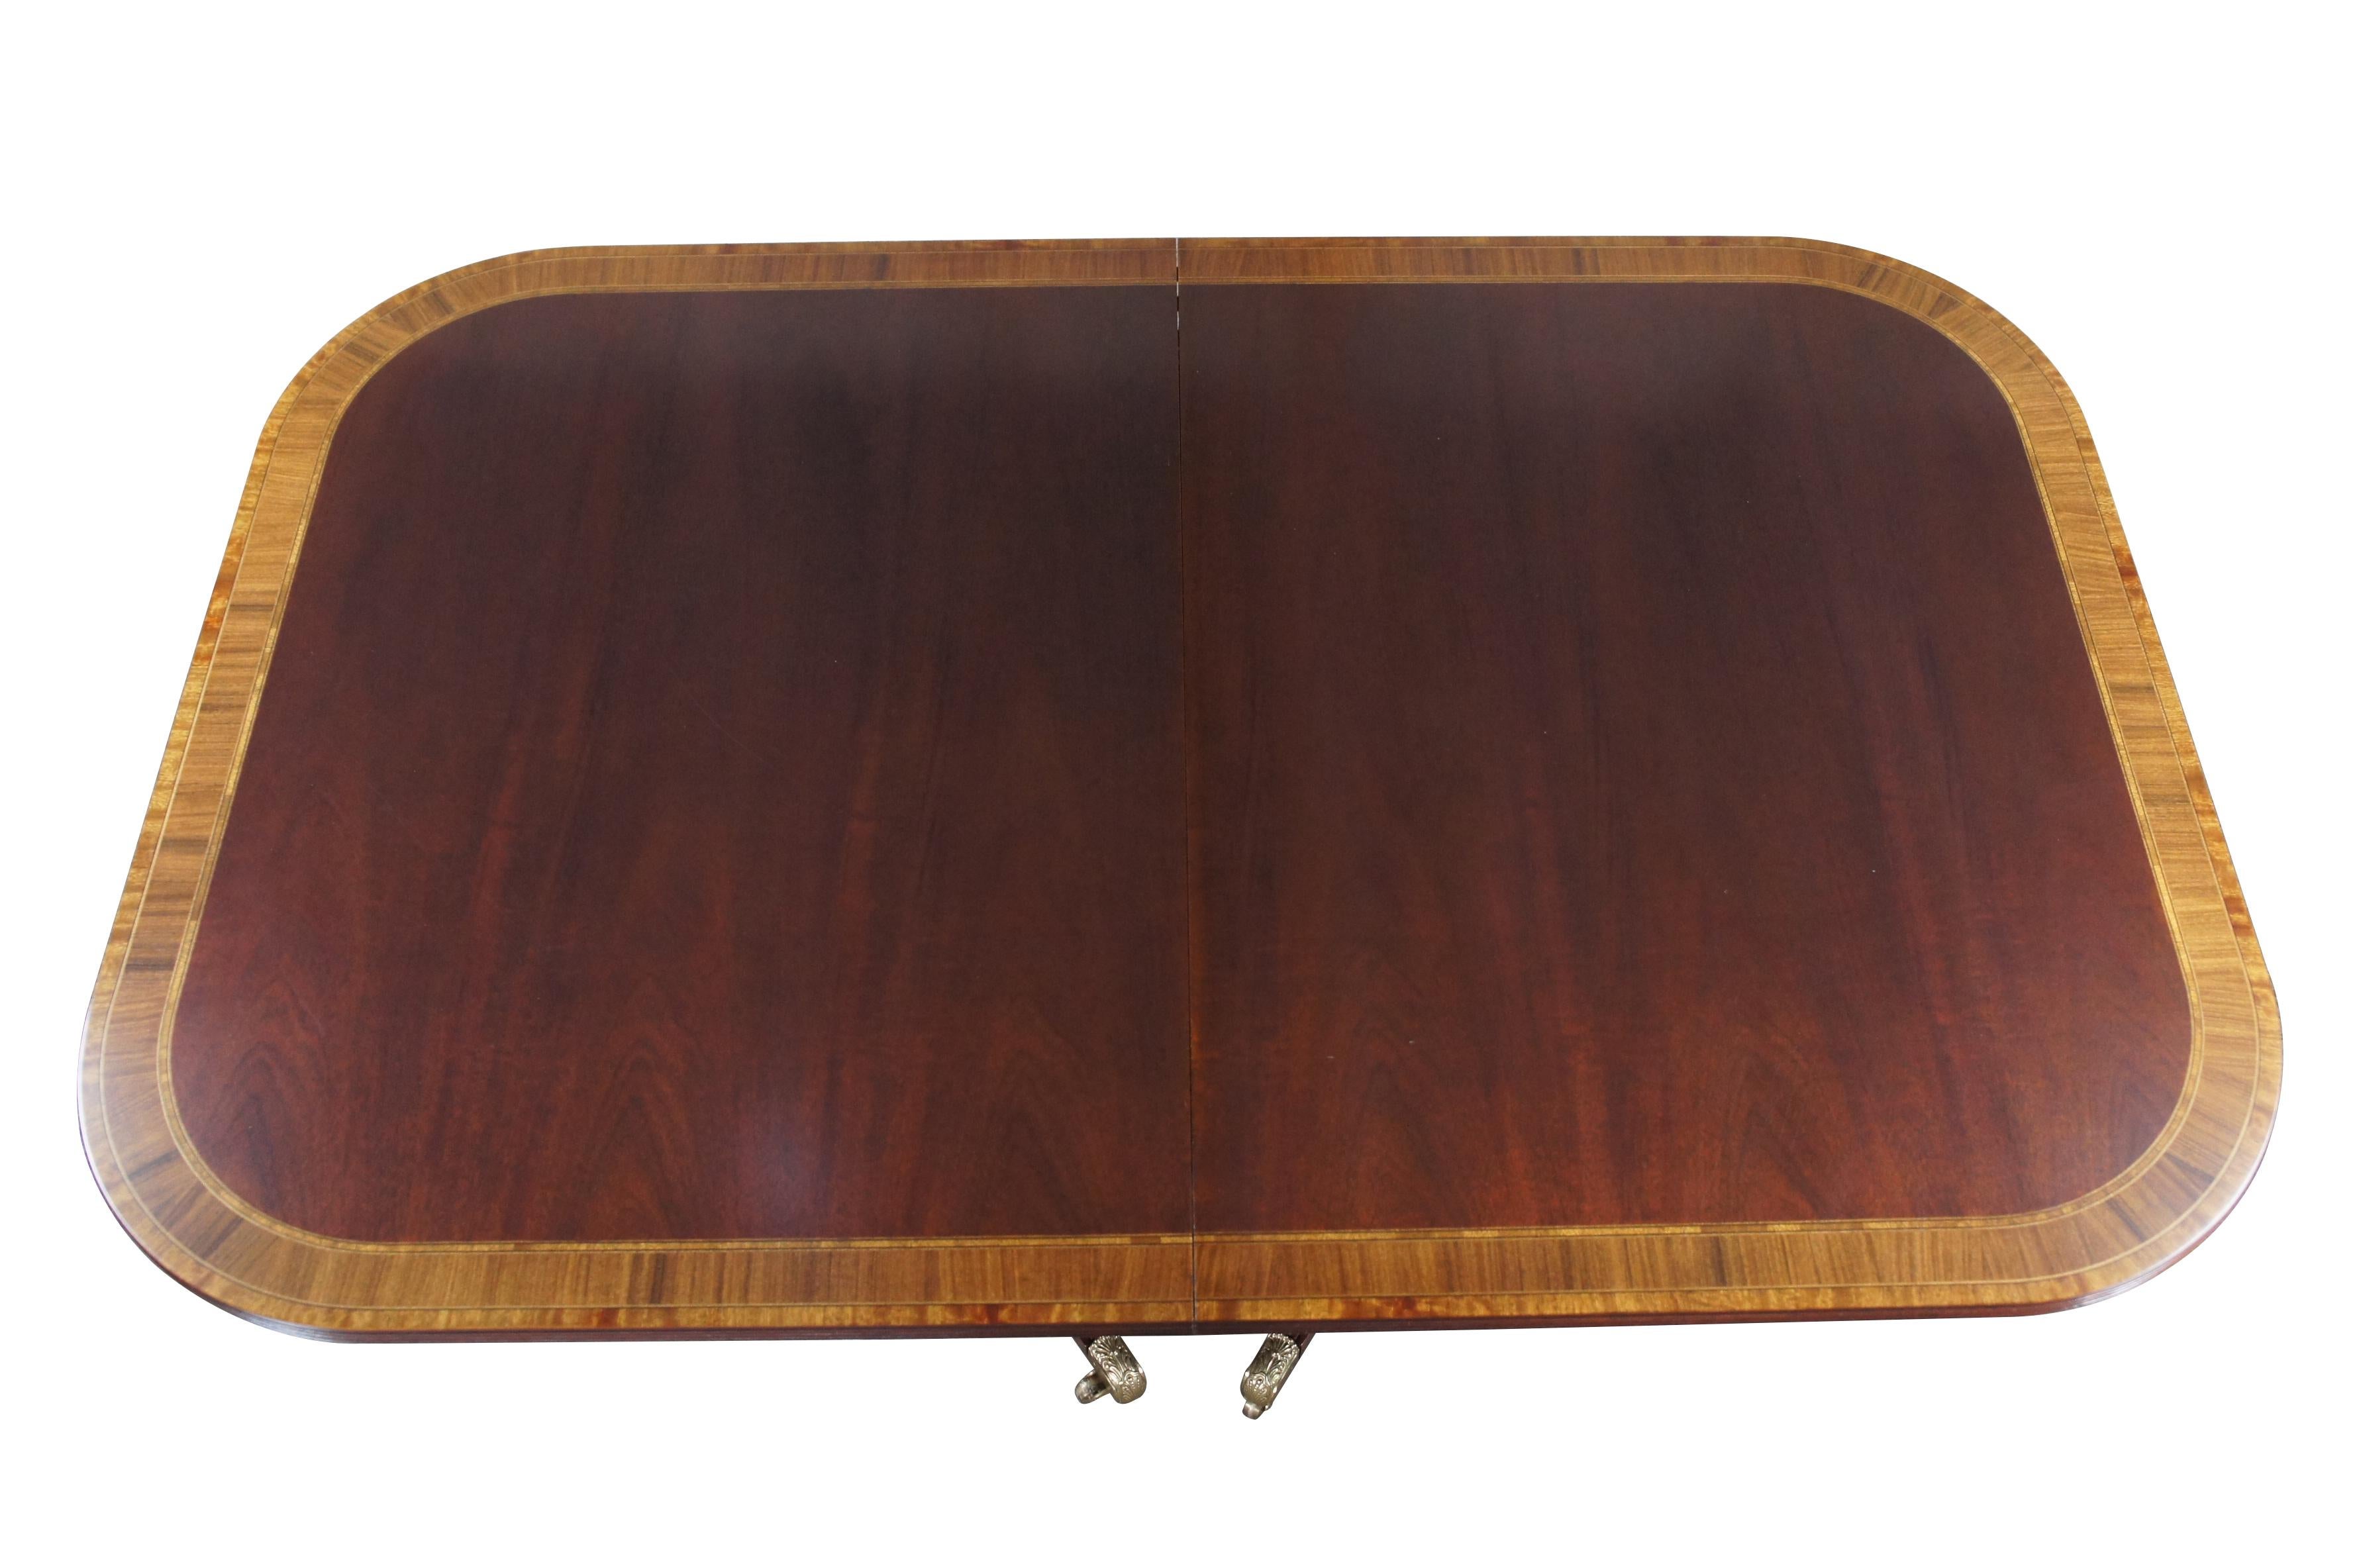 Baker Furniture English Regency Mahogany Double Pedestal Dining Table 104